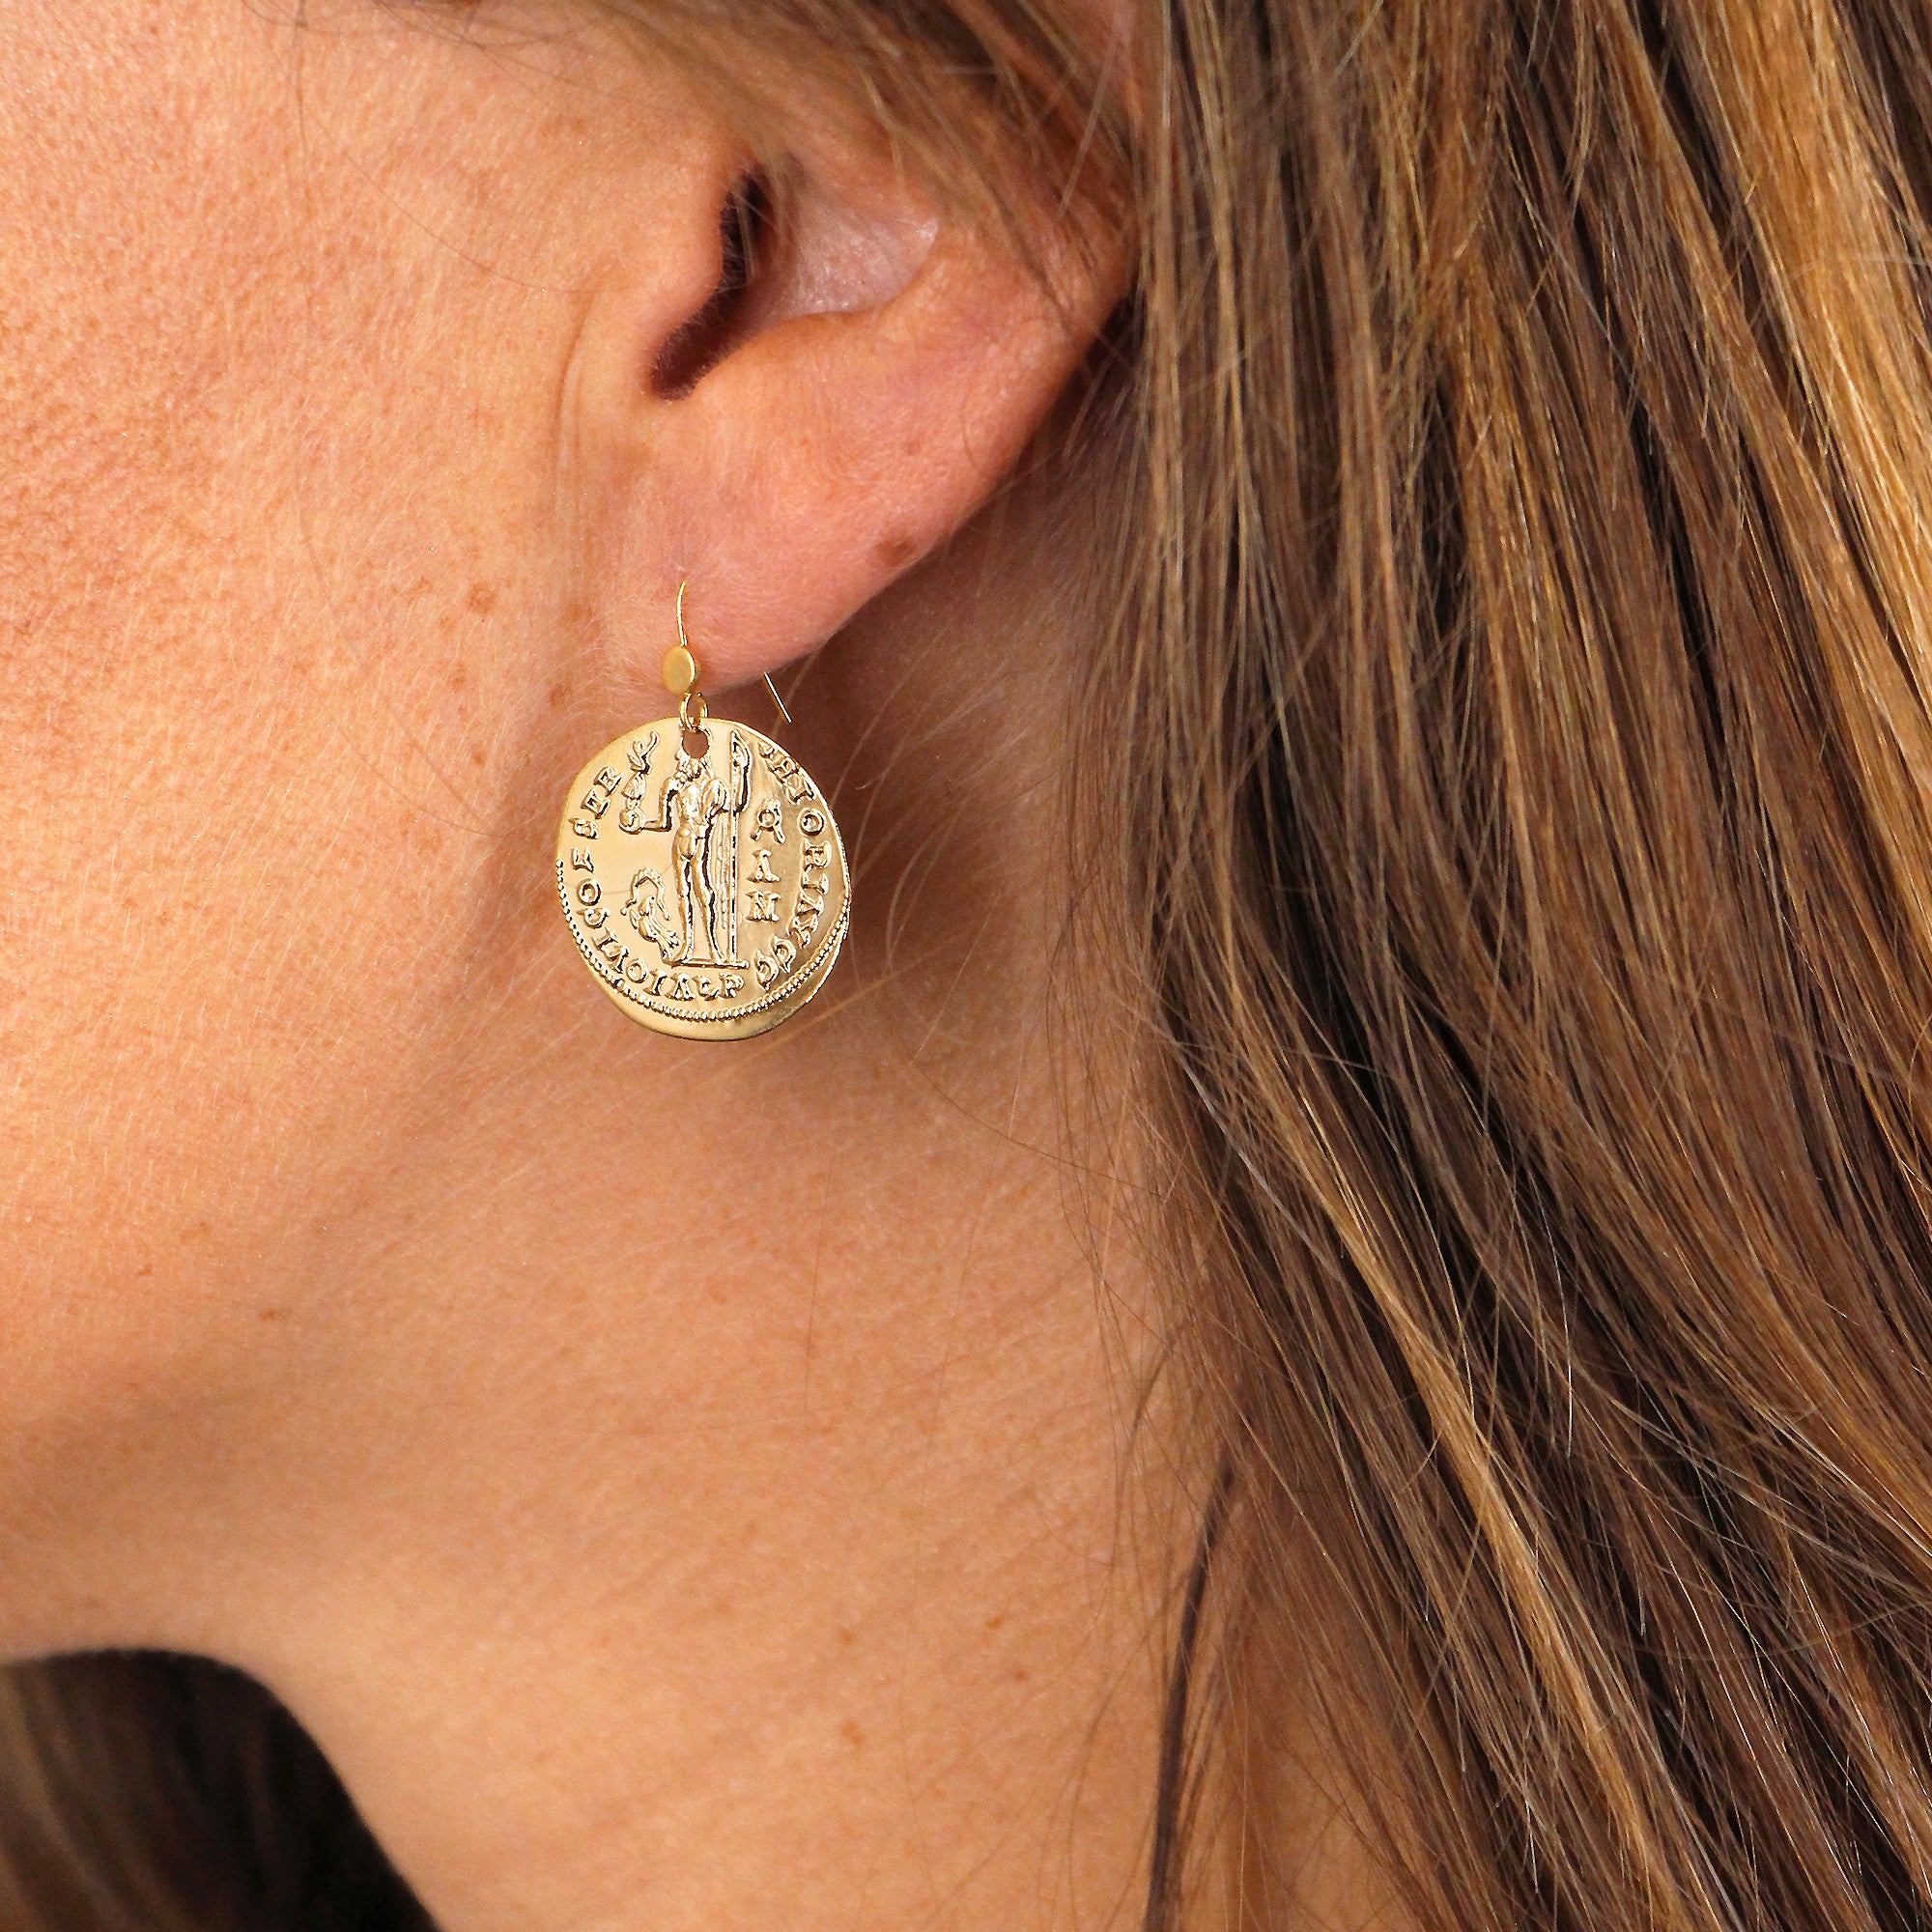 Osiris earrings